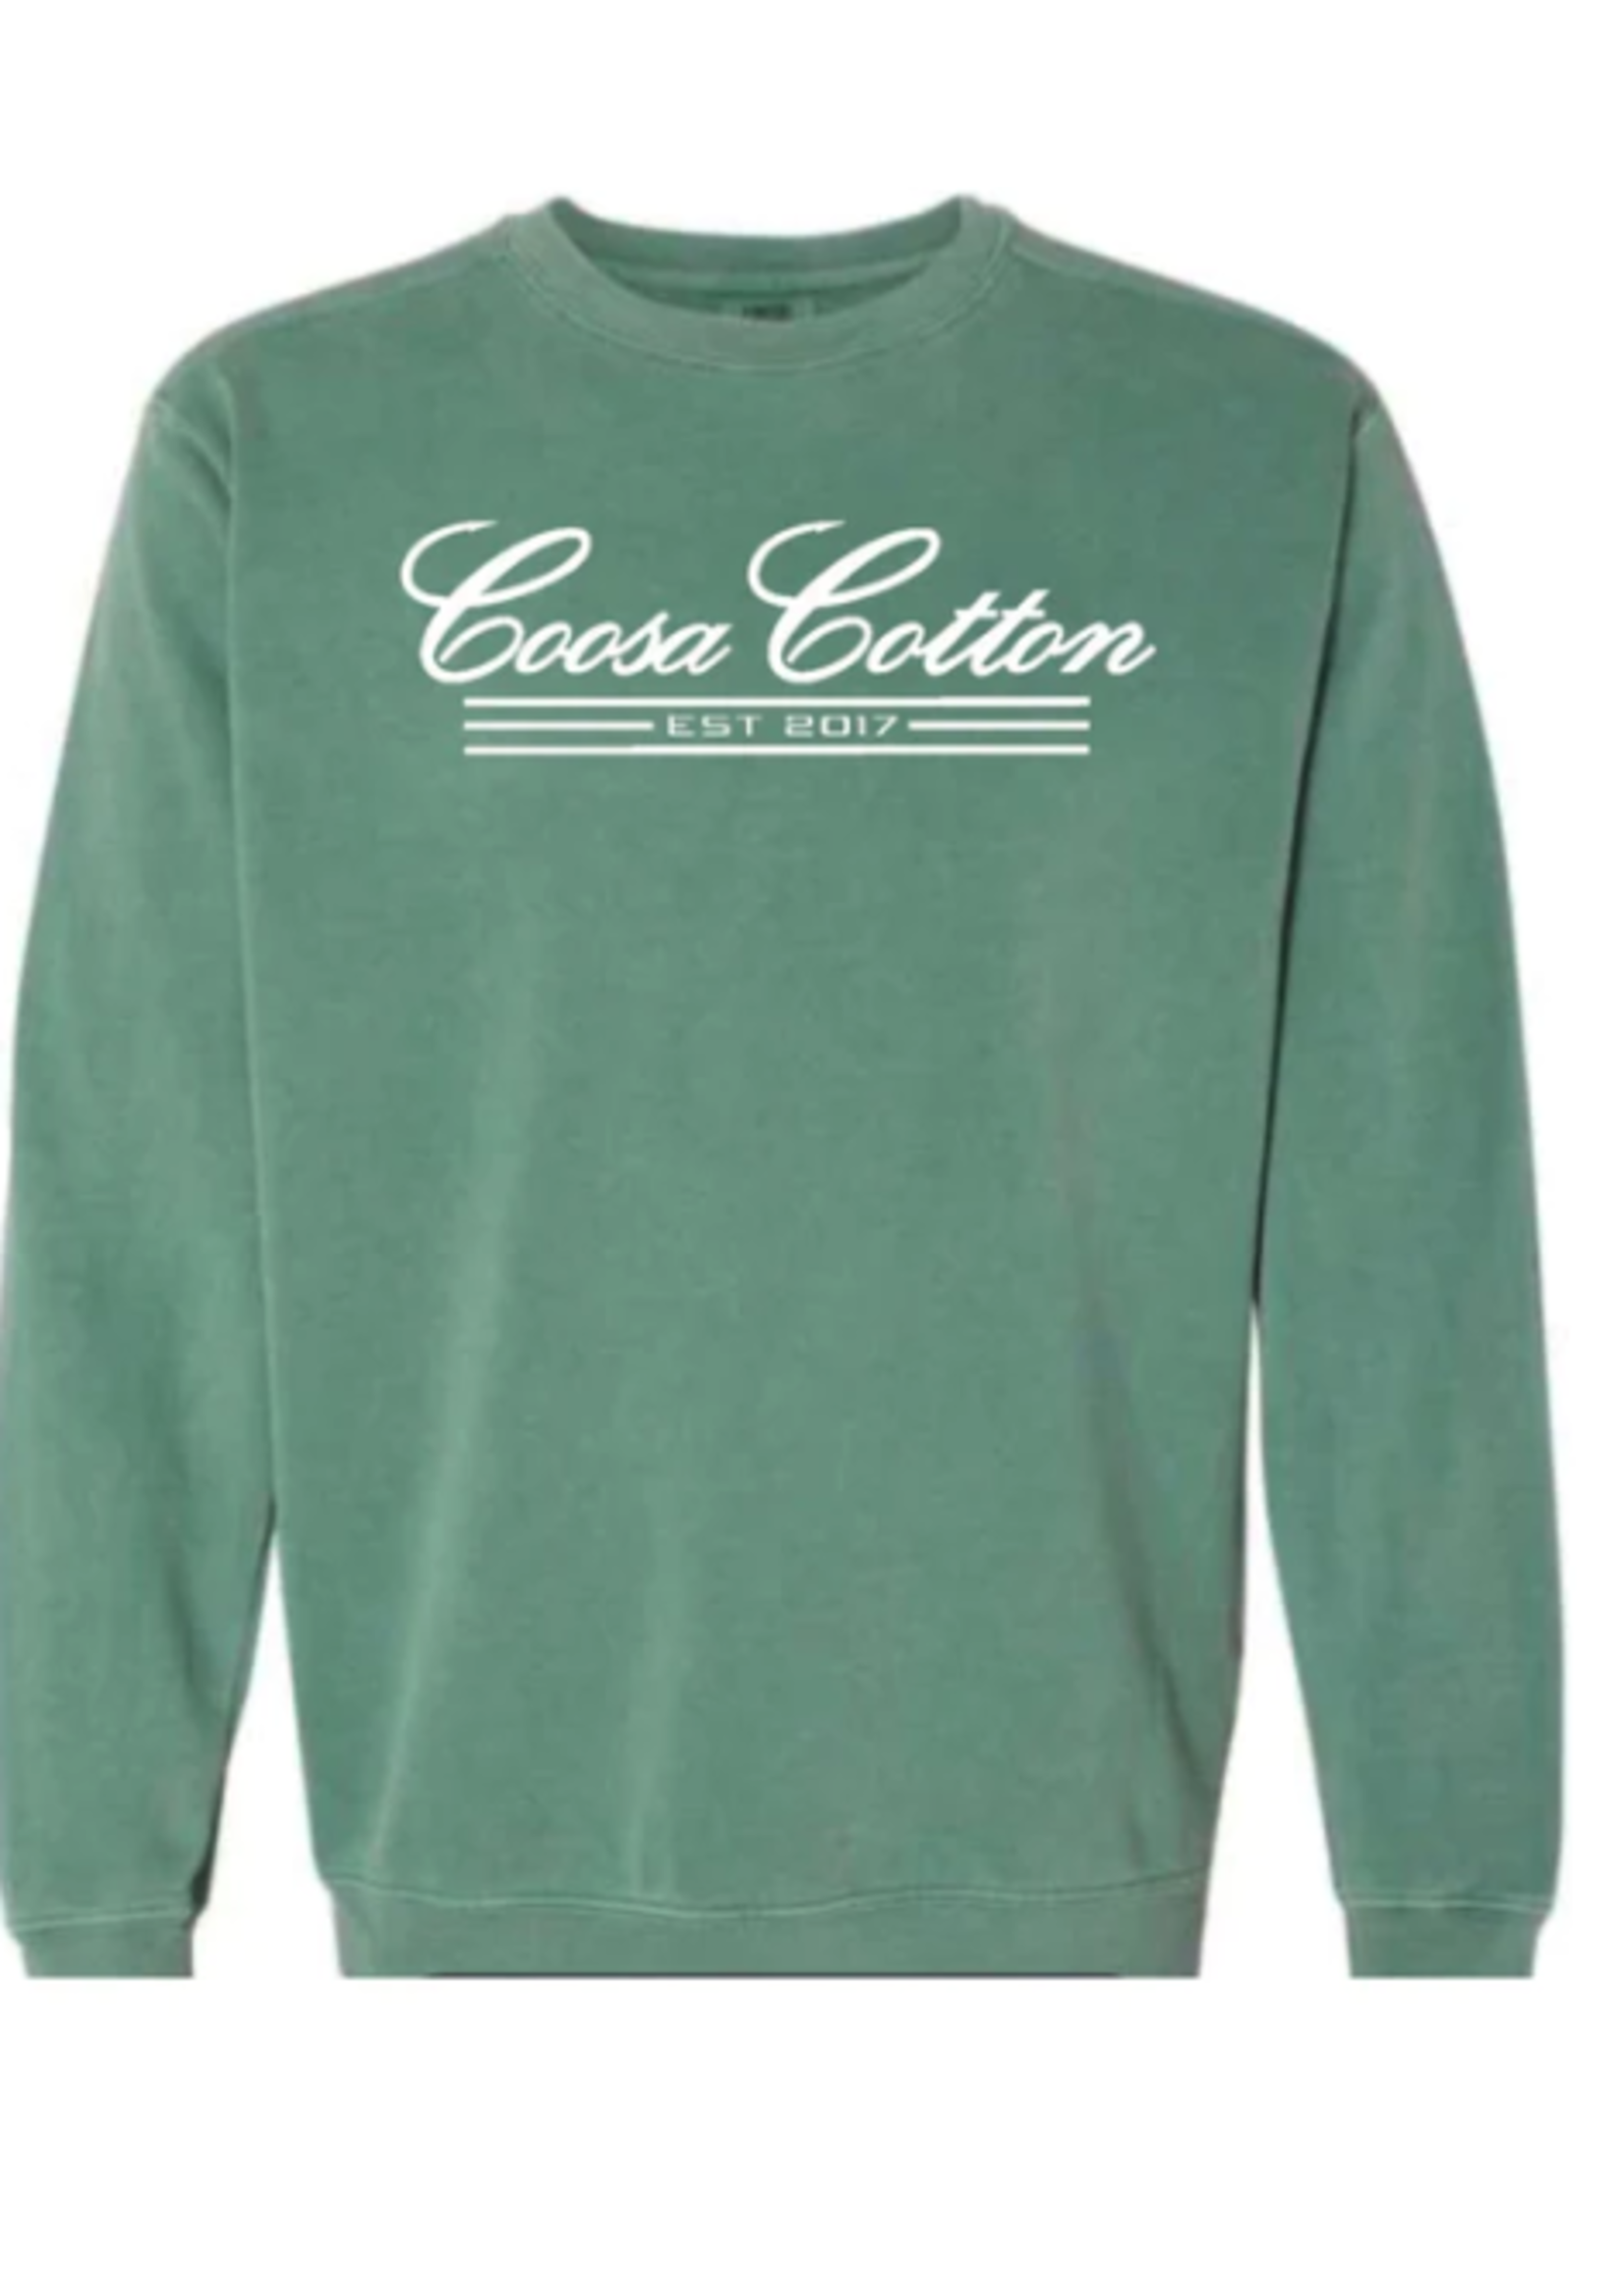 Coosa Cotton Coosa Cotton Crewneck Sweatshirt